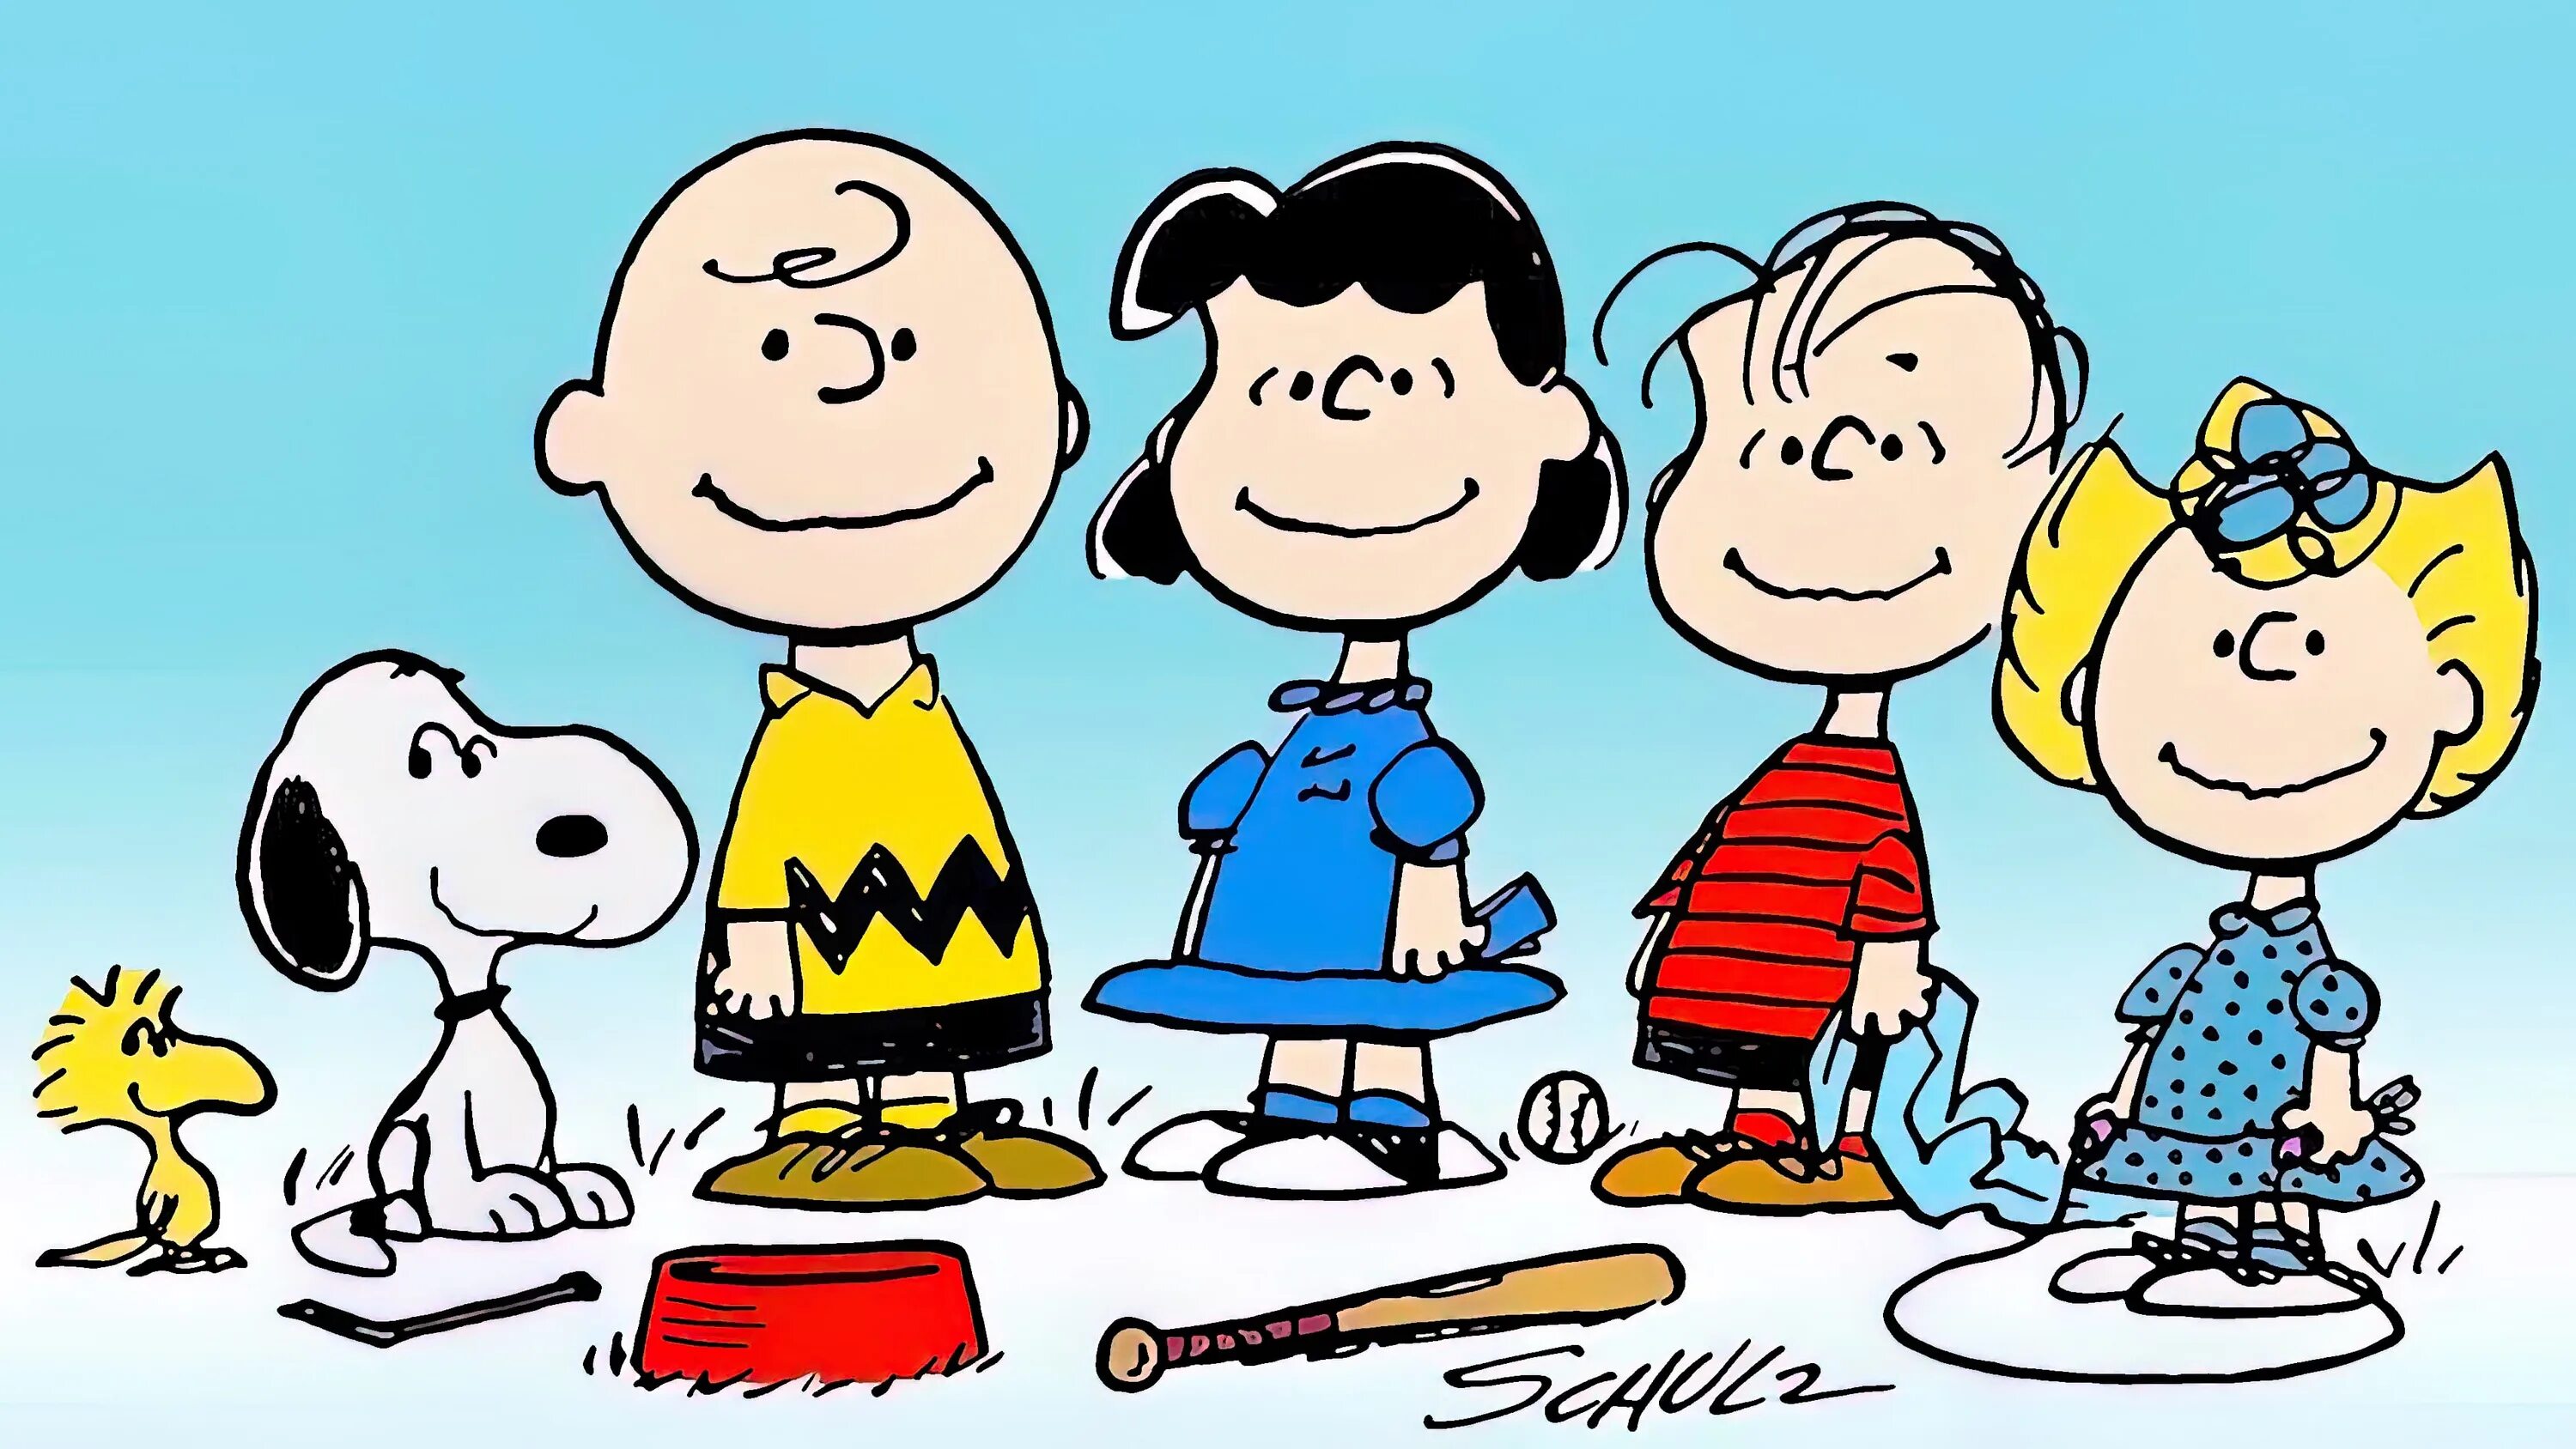 Charlie brown. Чарли Браун, «Peanuts». Снупи и Чарли Браун. Чарли Браун комиксы. Чарли Браун Peanuts персонаж.